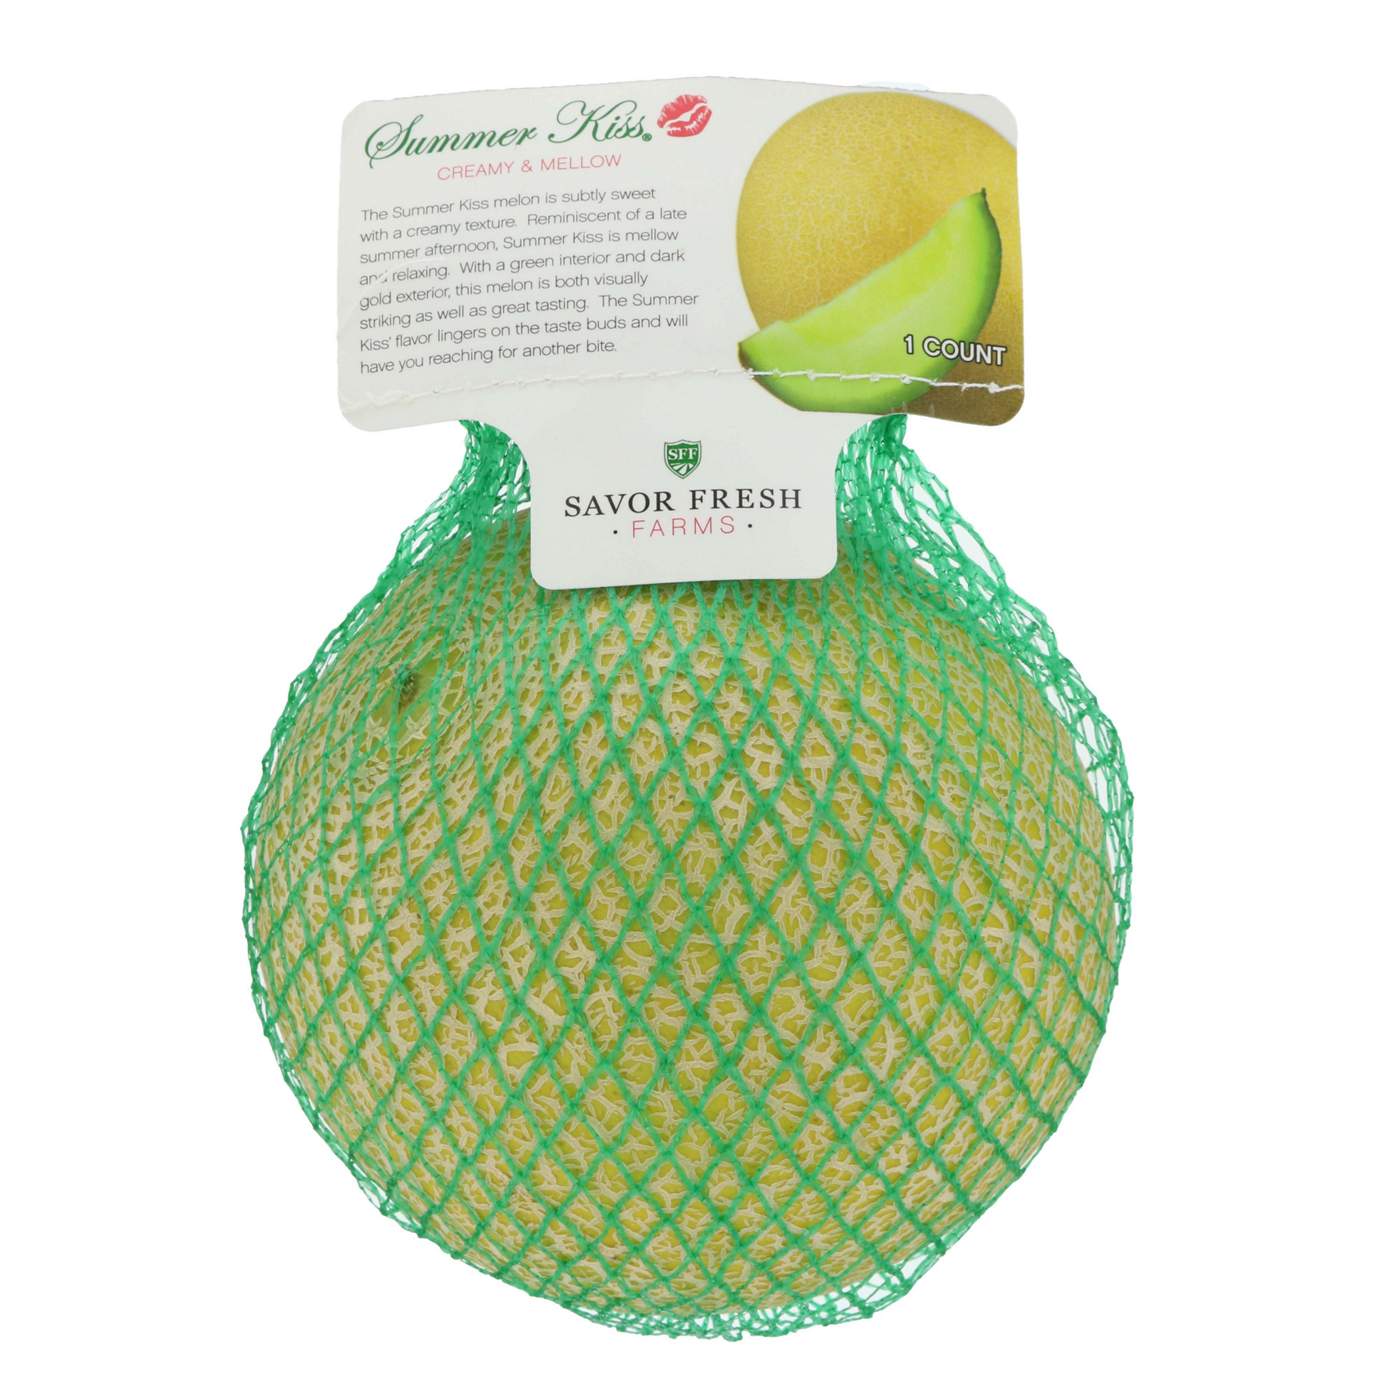 Fresh Summer Kiss Melon; image 2 of 2